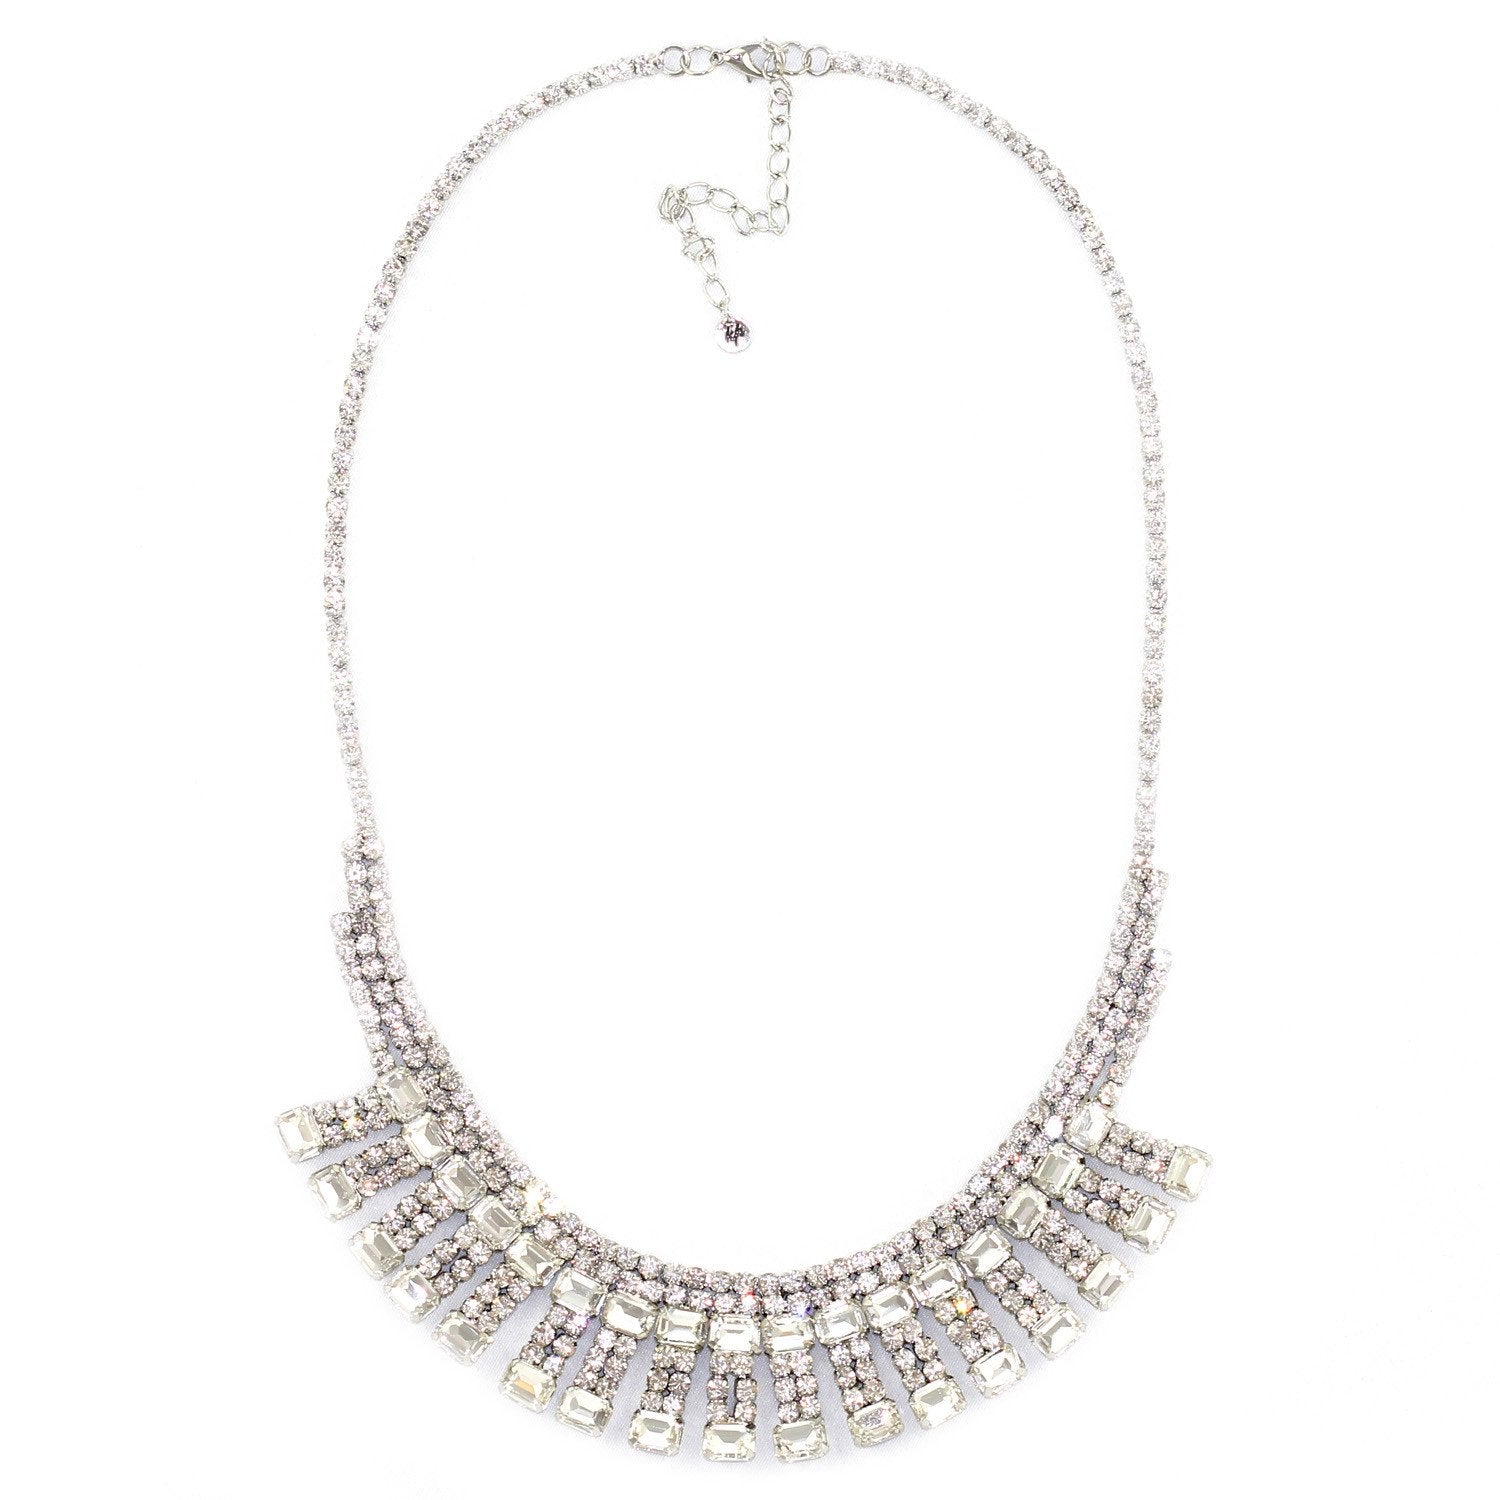 Jewel Saturation Necklace - Miraposa